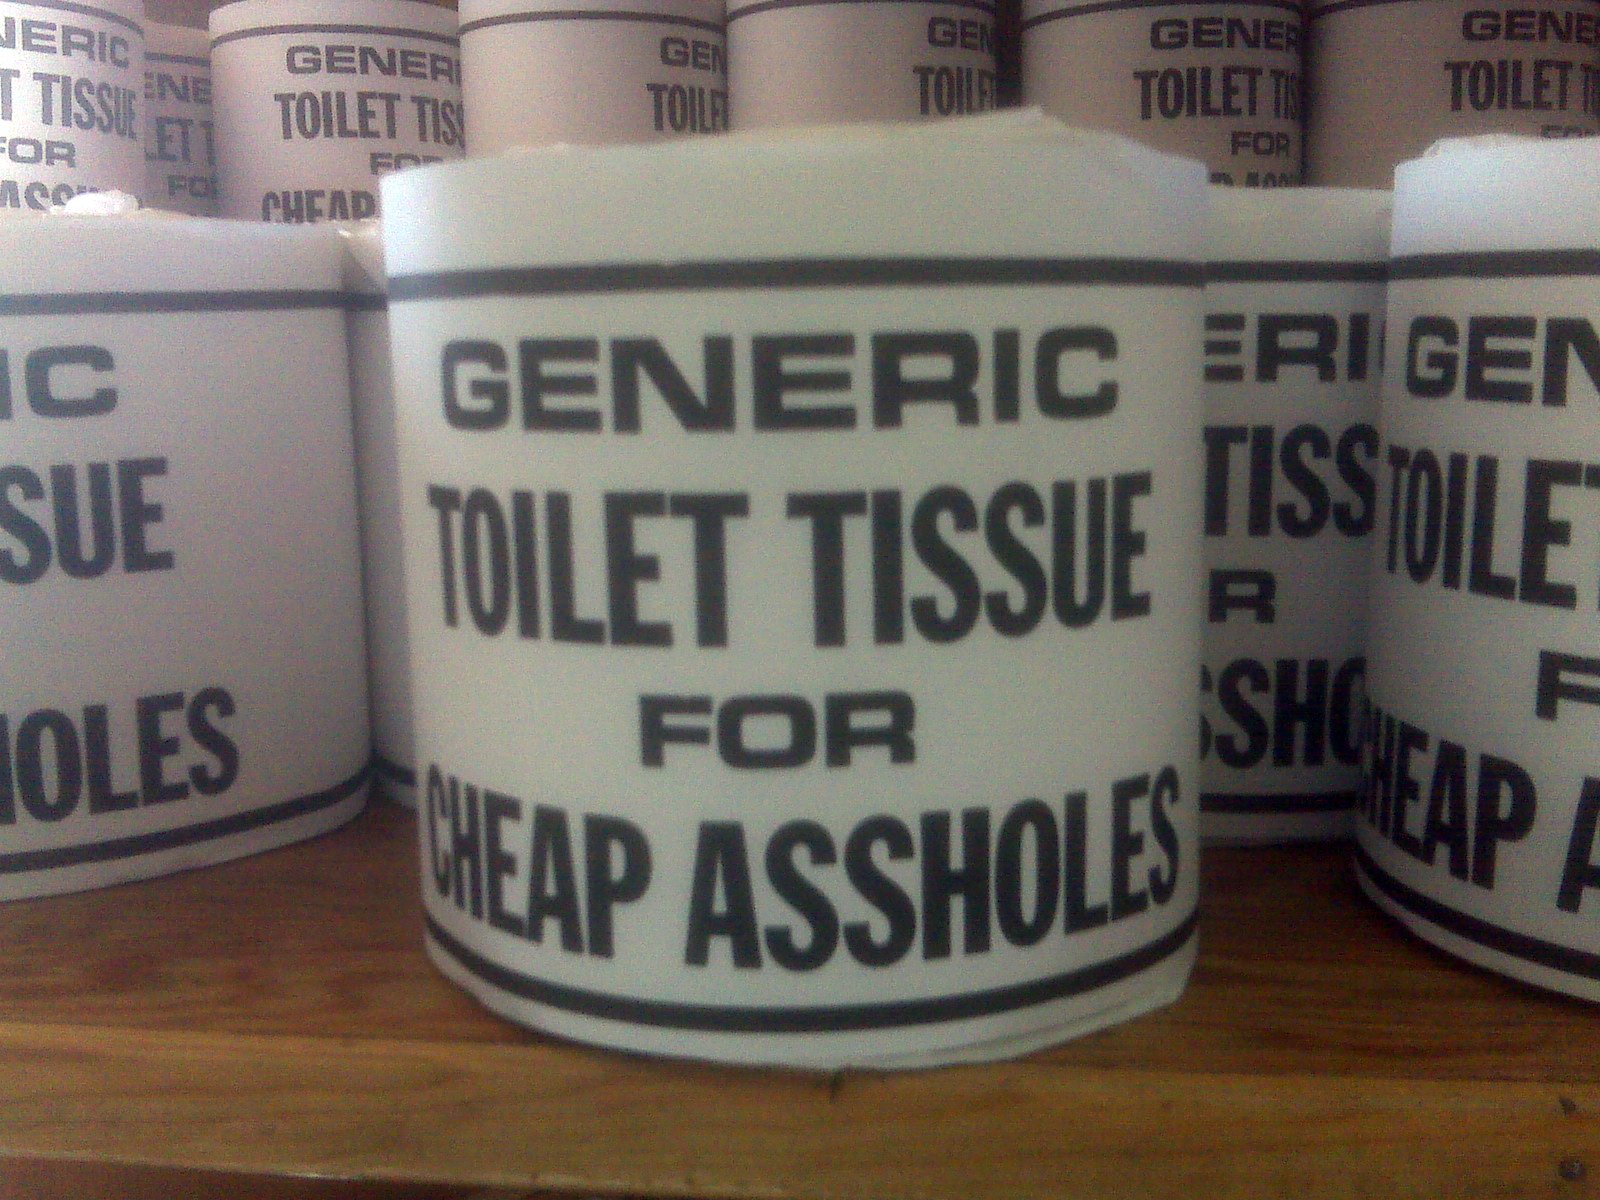 Generic toilet tissue for cheap assholes